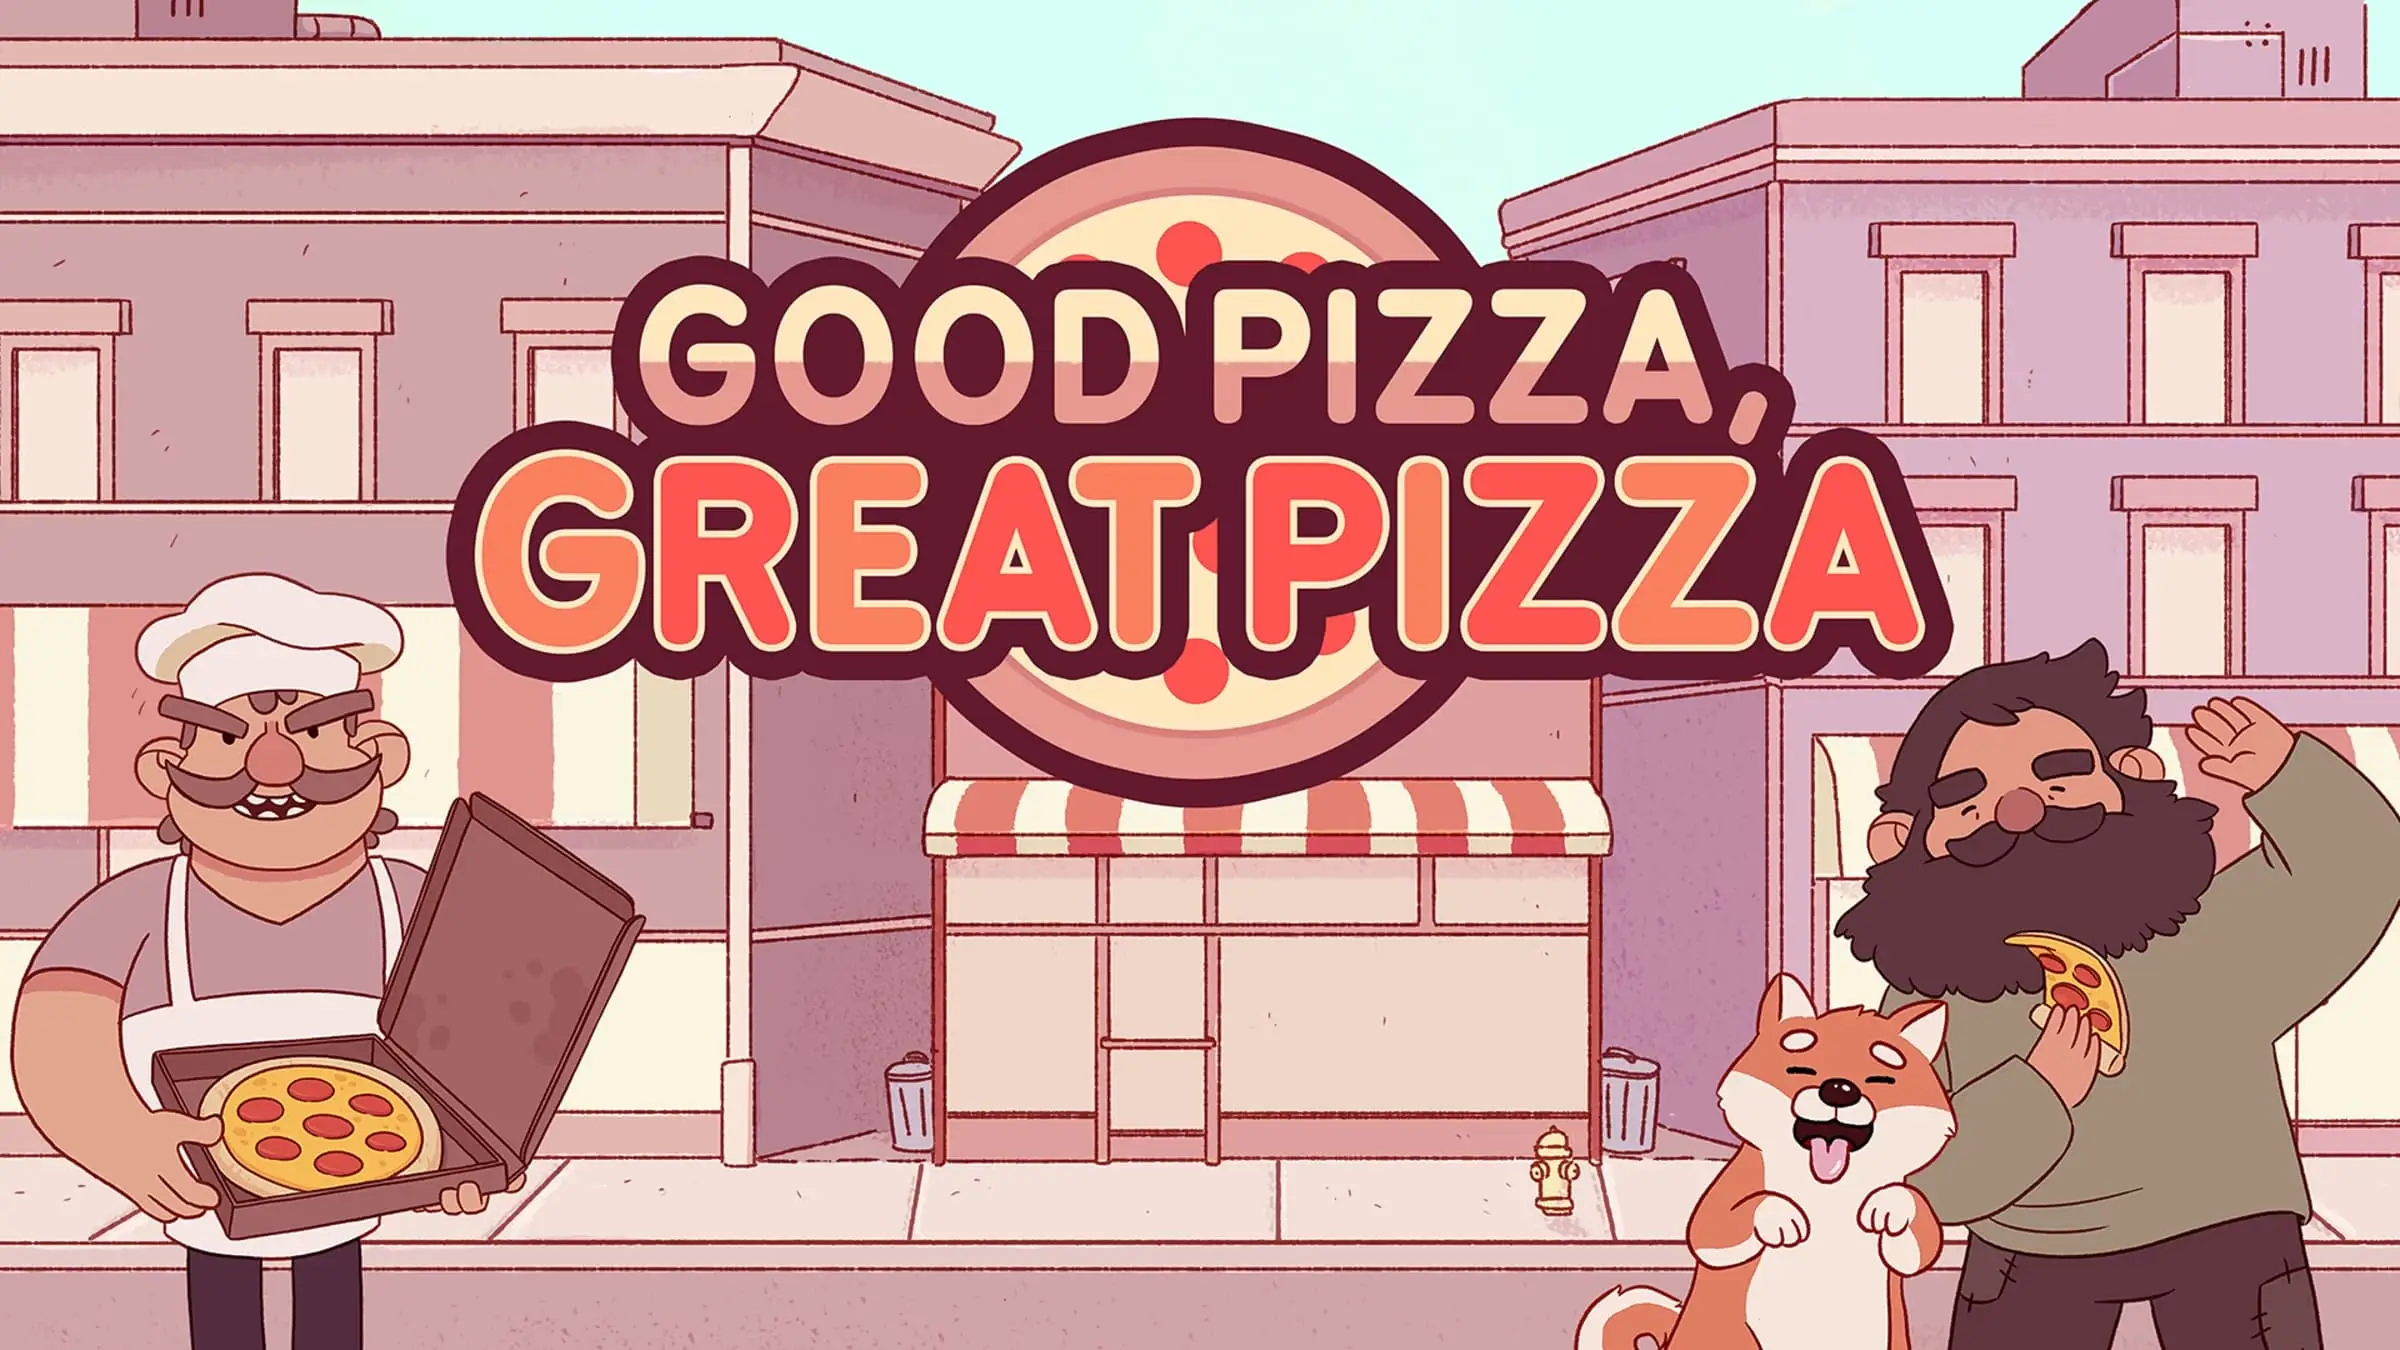 Giới thiệu game mô phỏng Good Pizza, Great Pizza